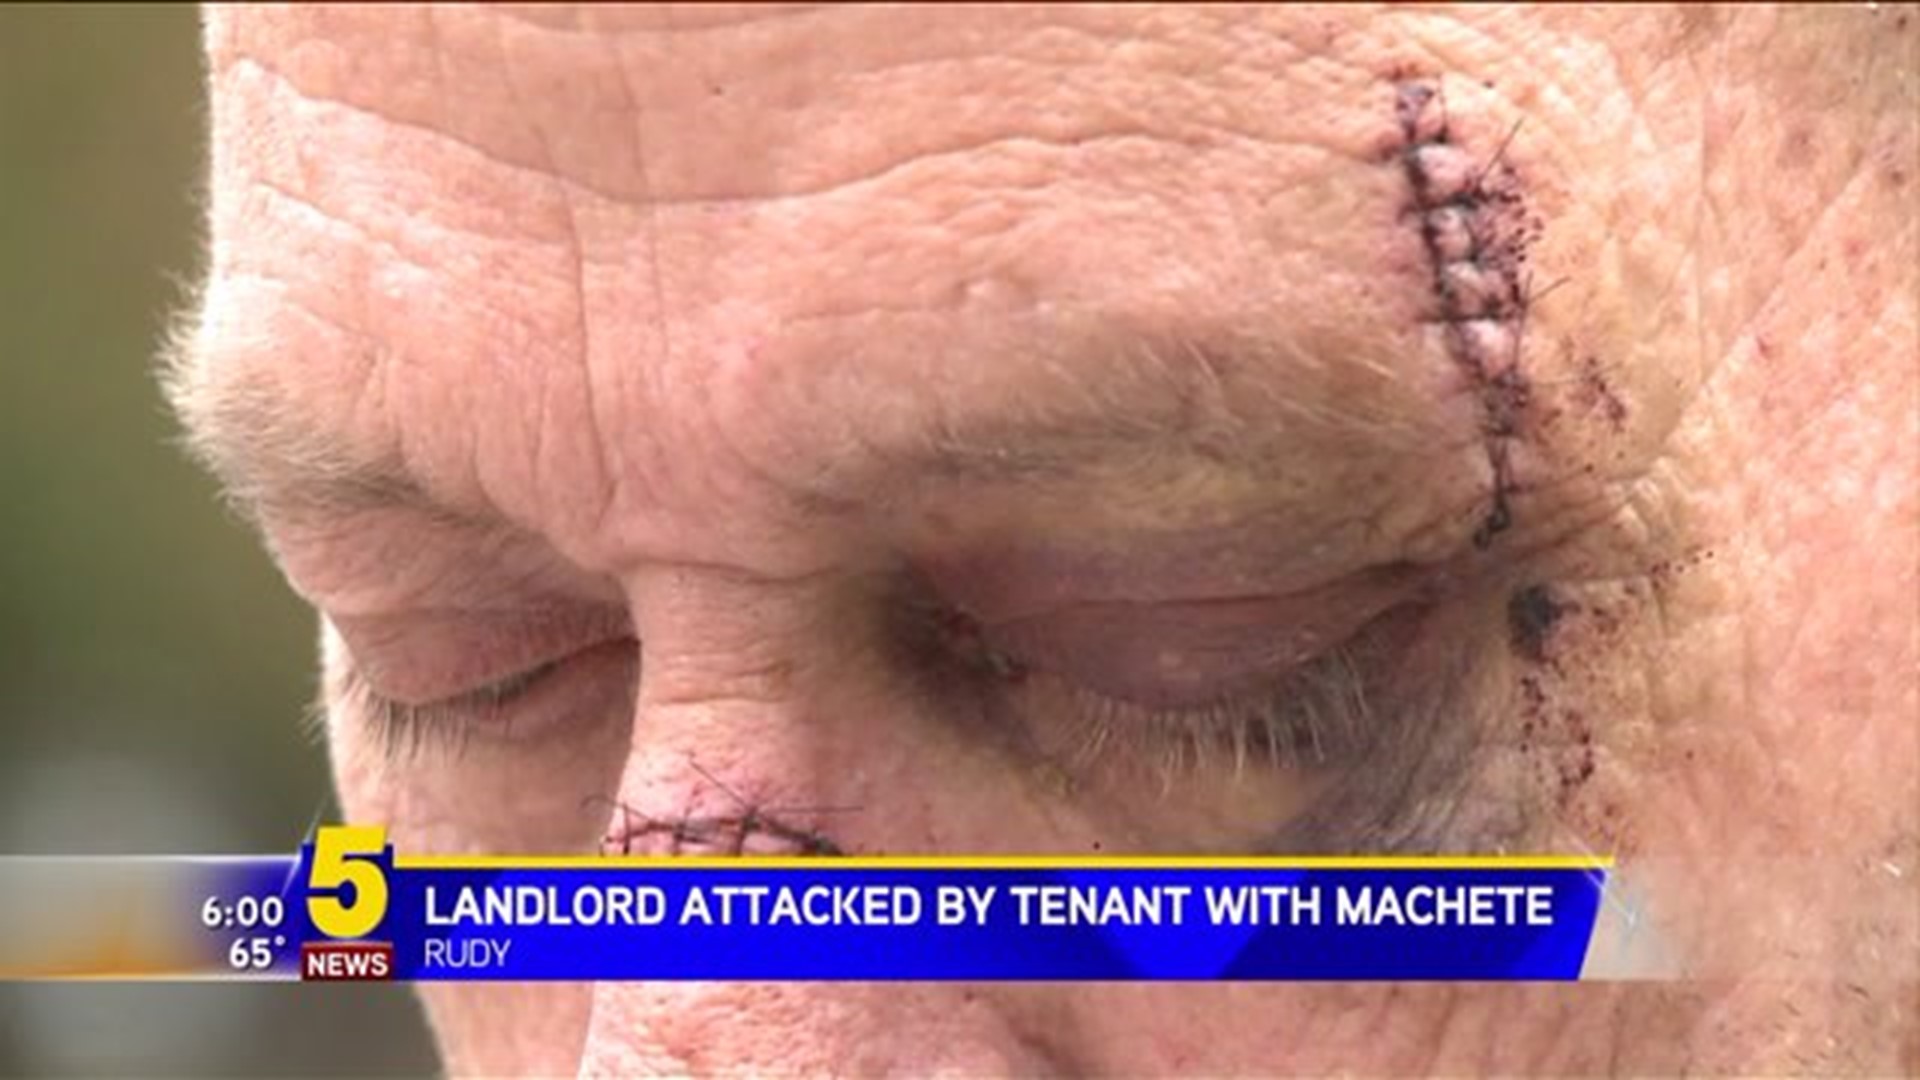 TENANT ATTACKS LANDLORD WITH MACHETE